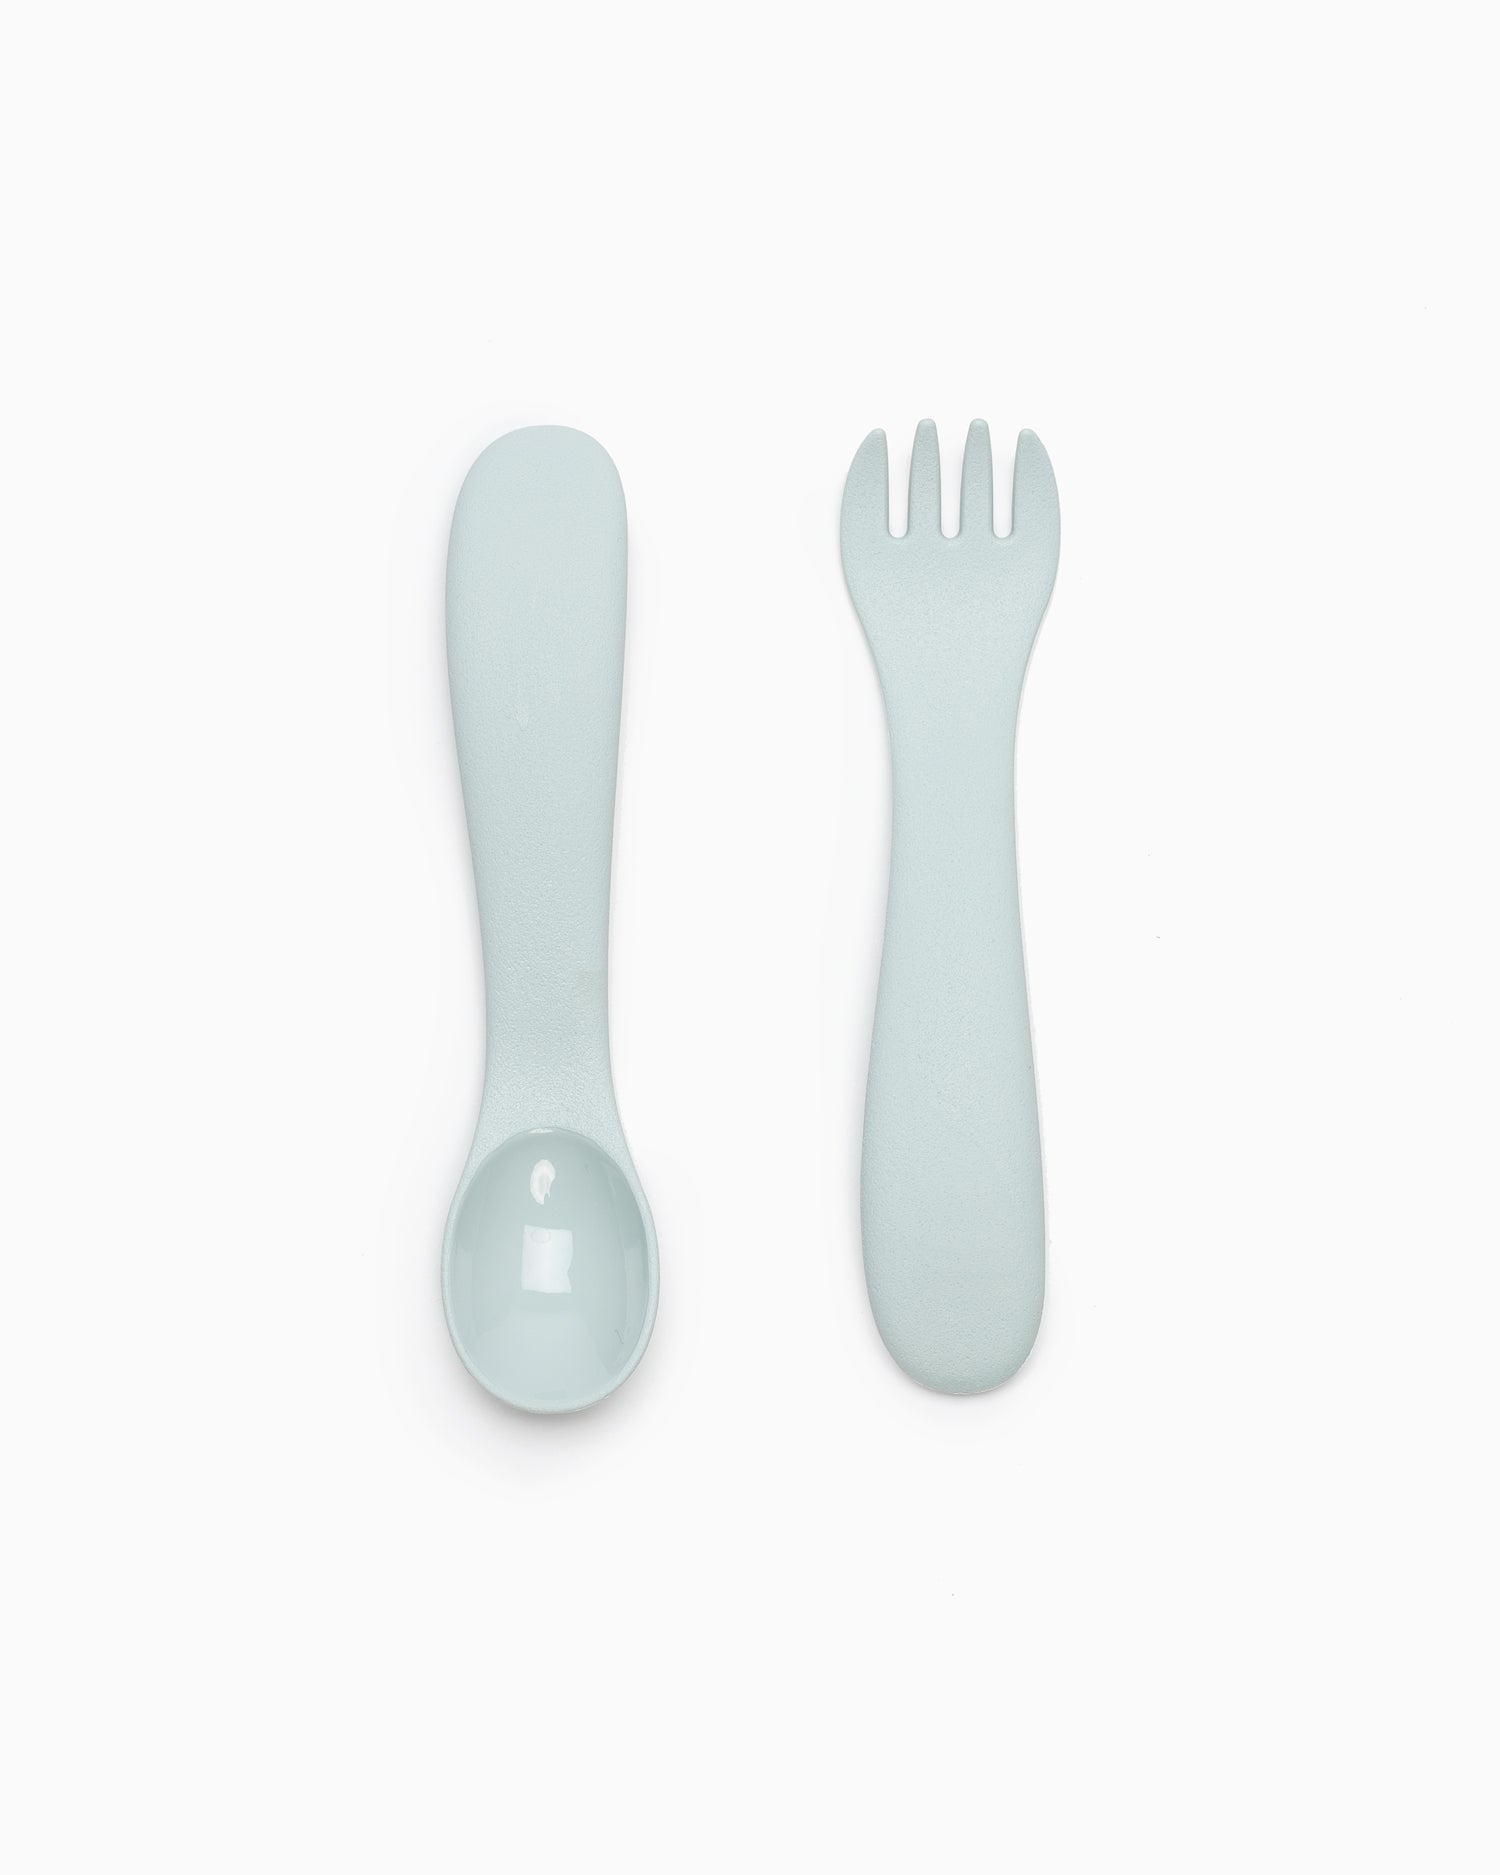 Bonbo Spoon & Fork - Blue Gray